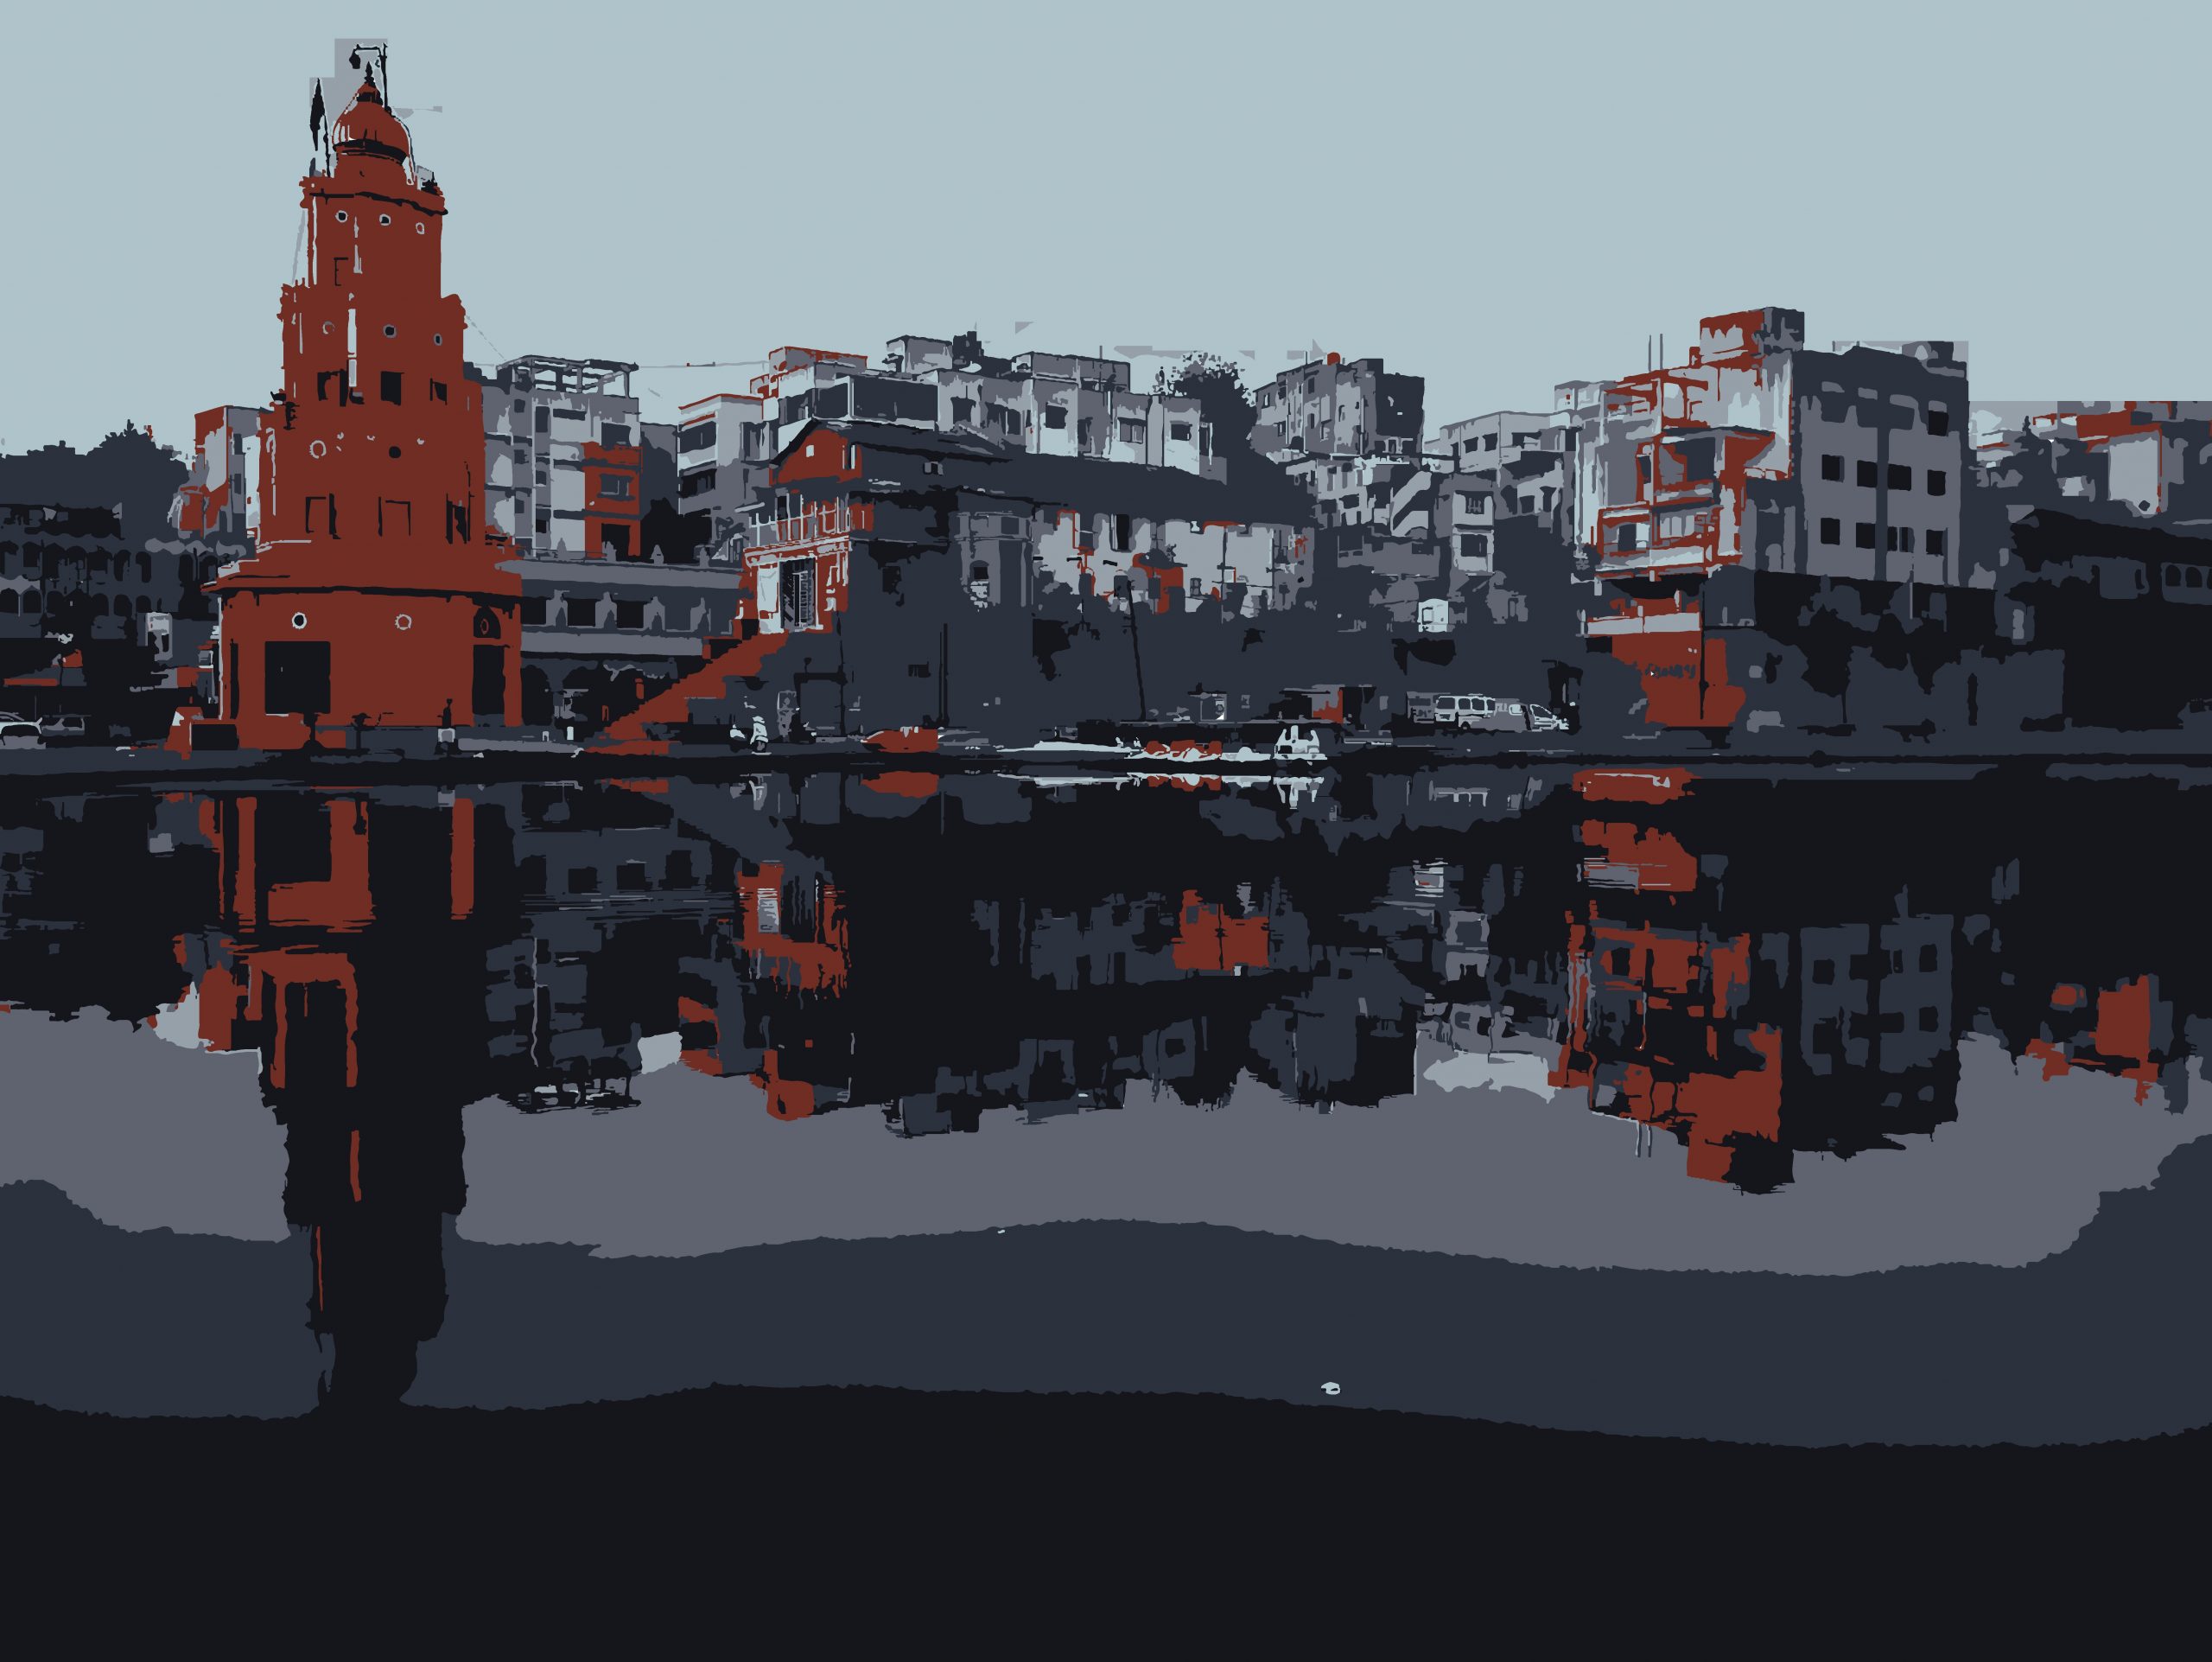 Illustration of a city near a river